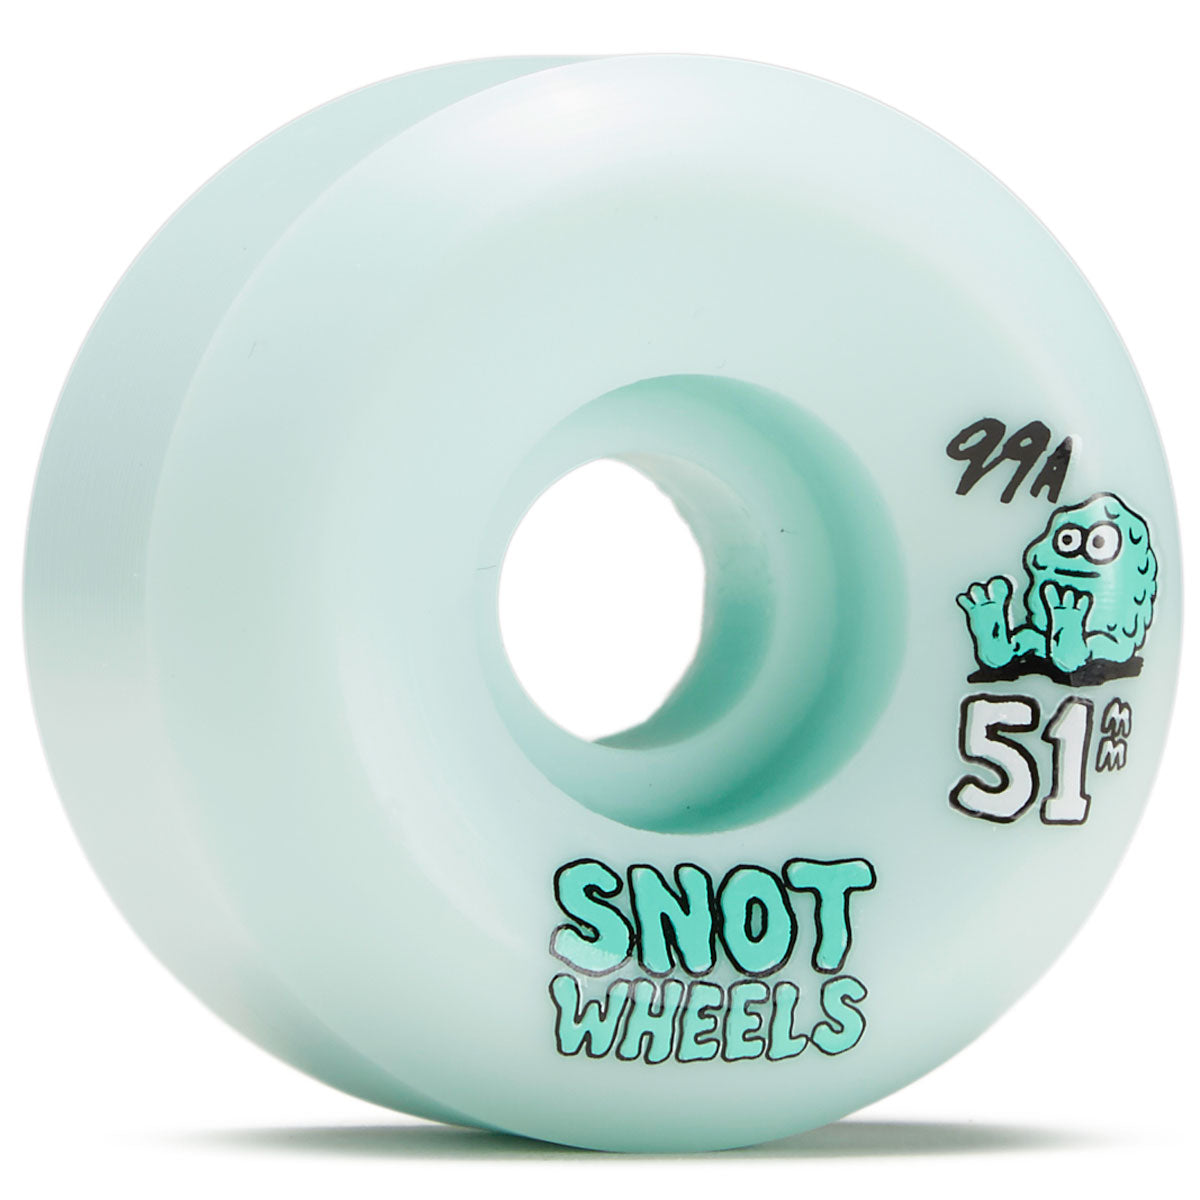 Snot Team 99a Skateboard Wheels - Teal - 51mm image 1